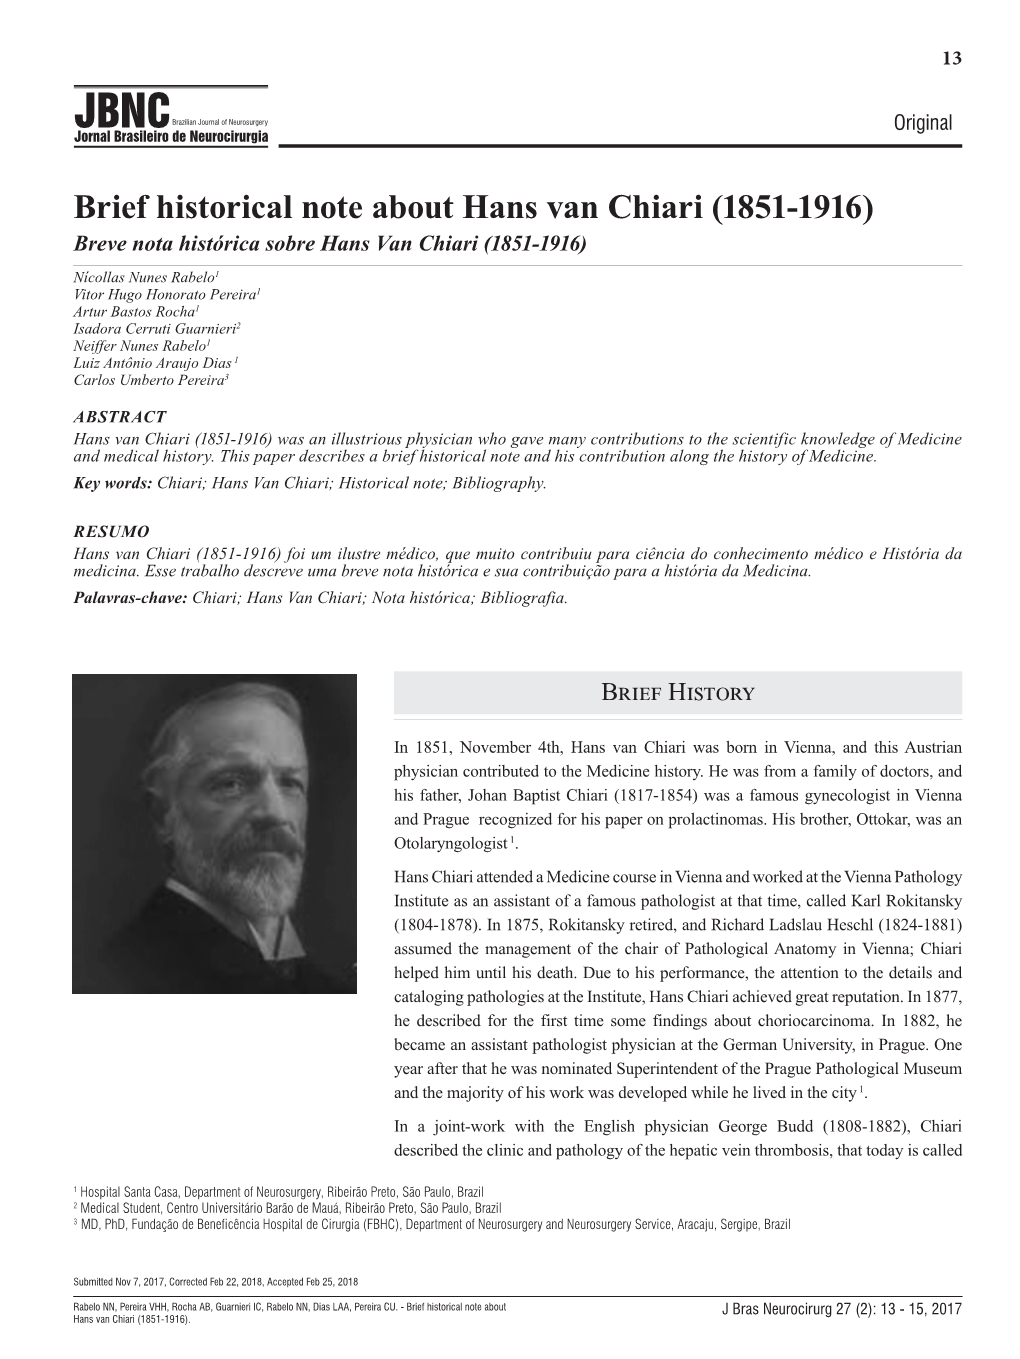 Brief Historical Note About Hans Van Chiari (1851-1916)